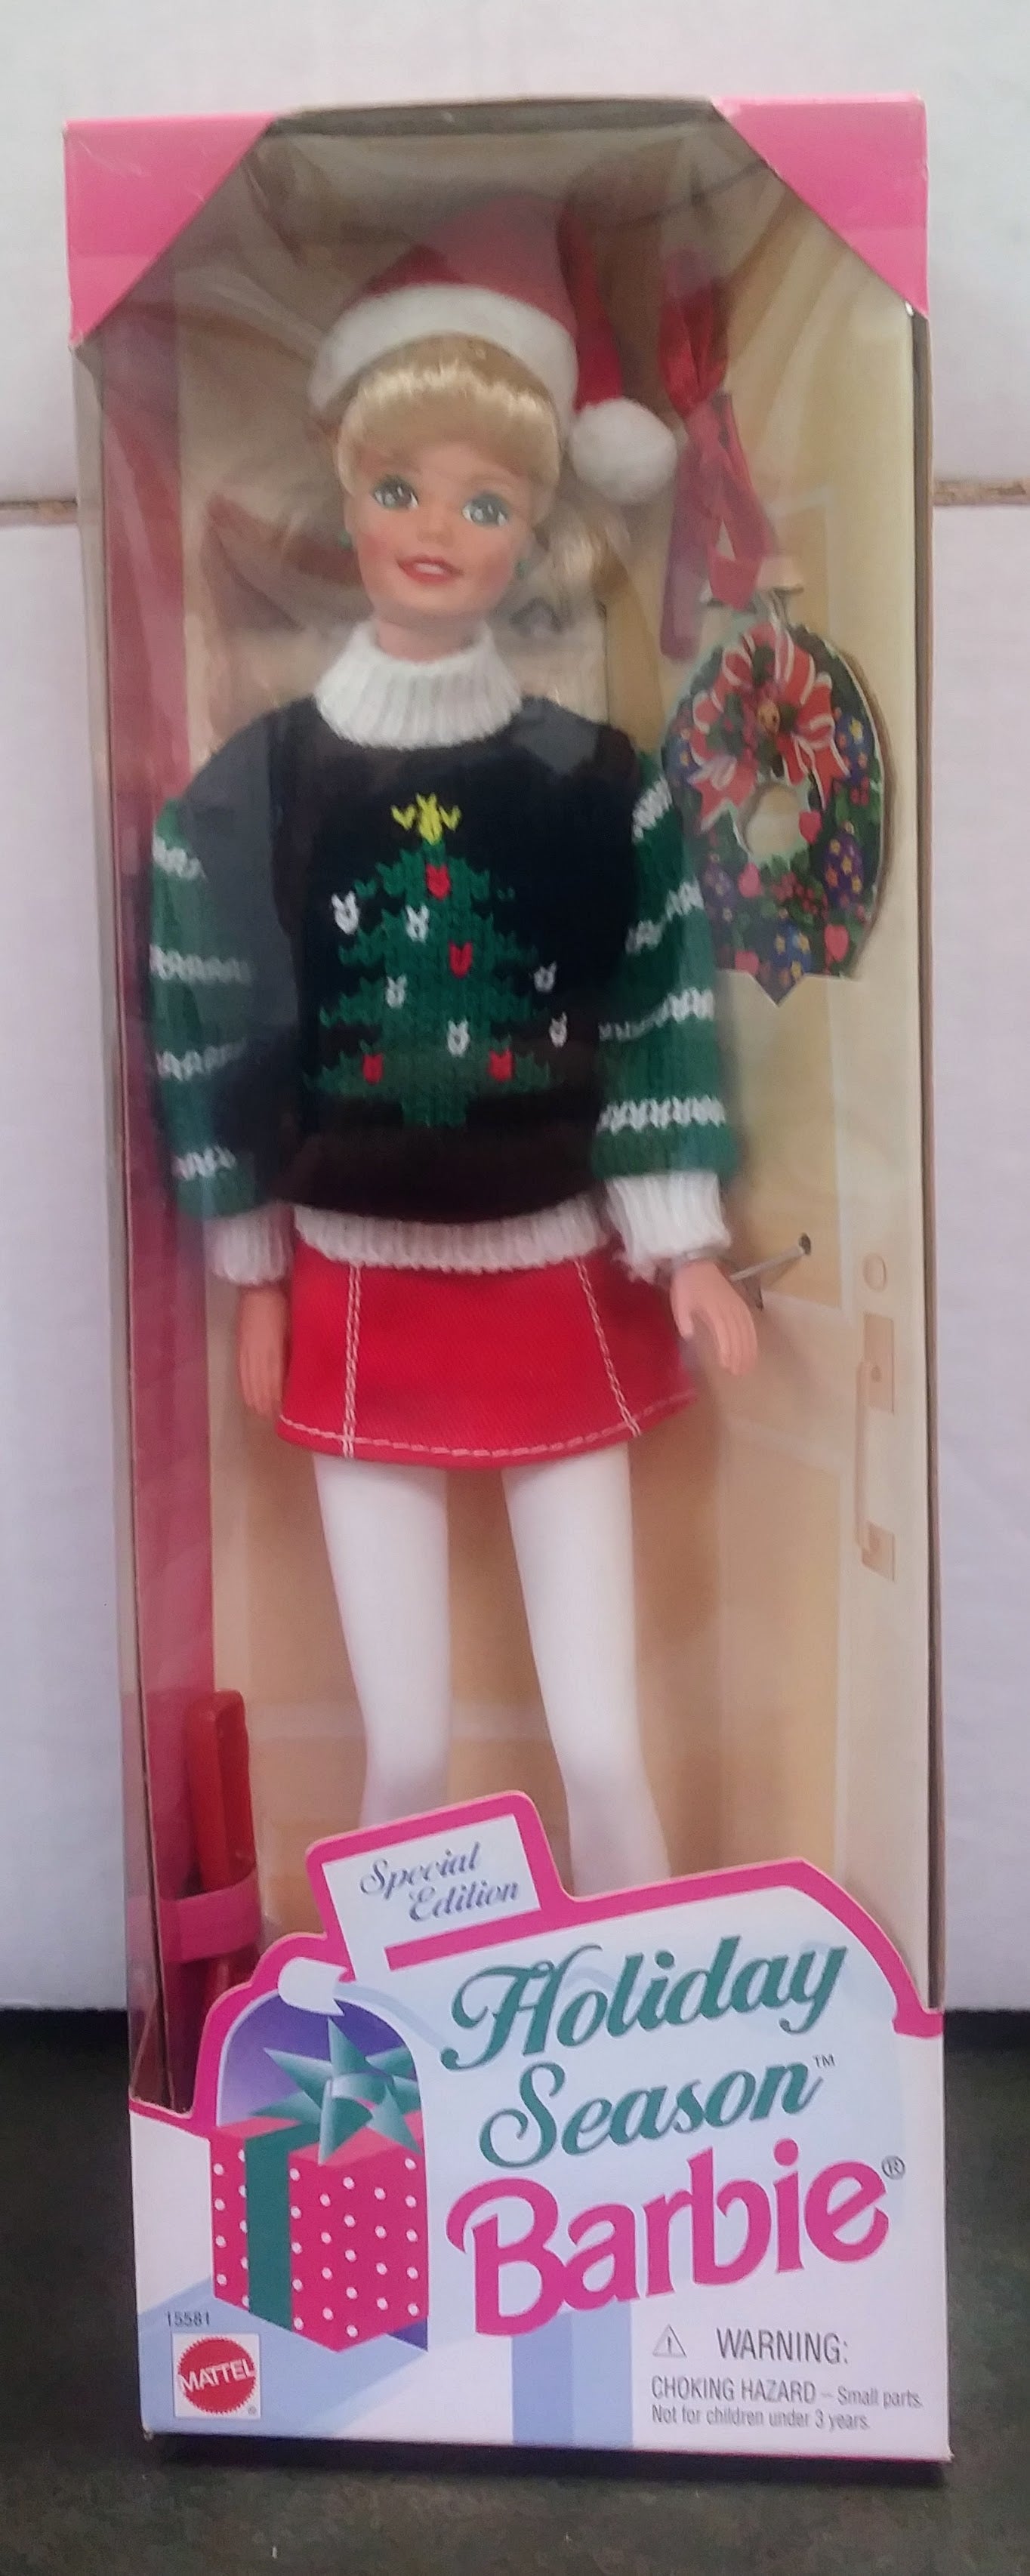 Barbie Doll - Holiday Season Barbie (1996)